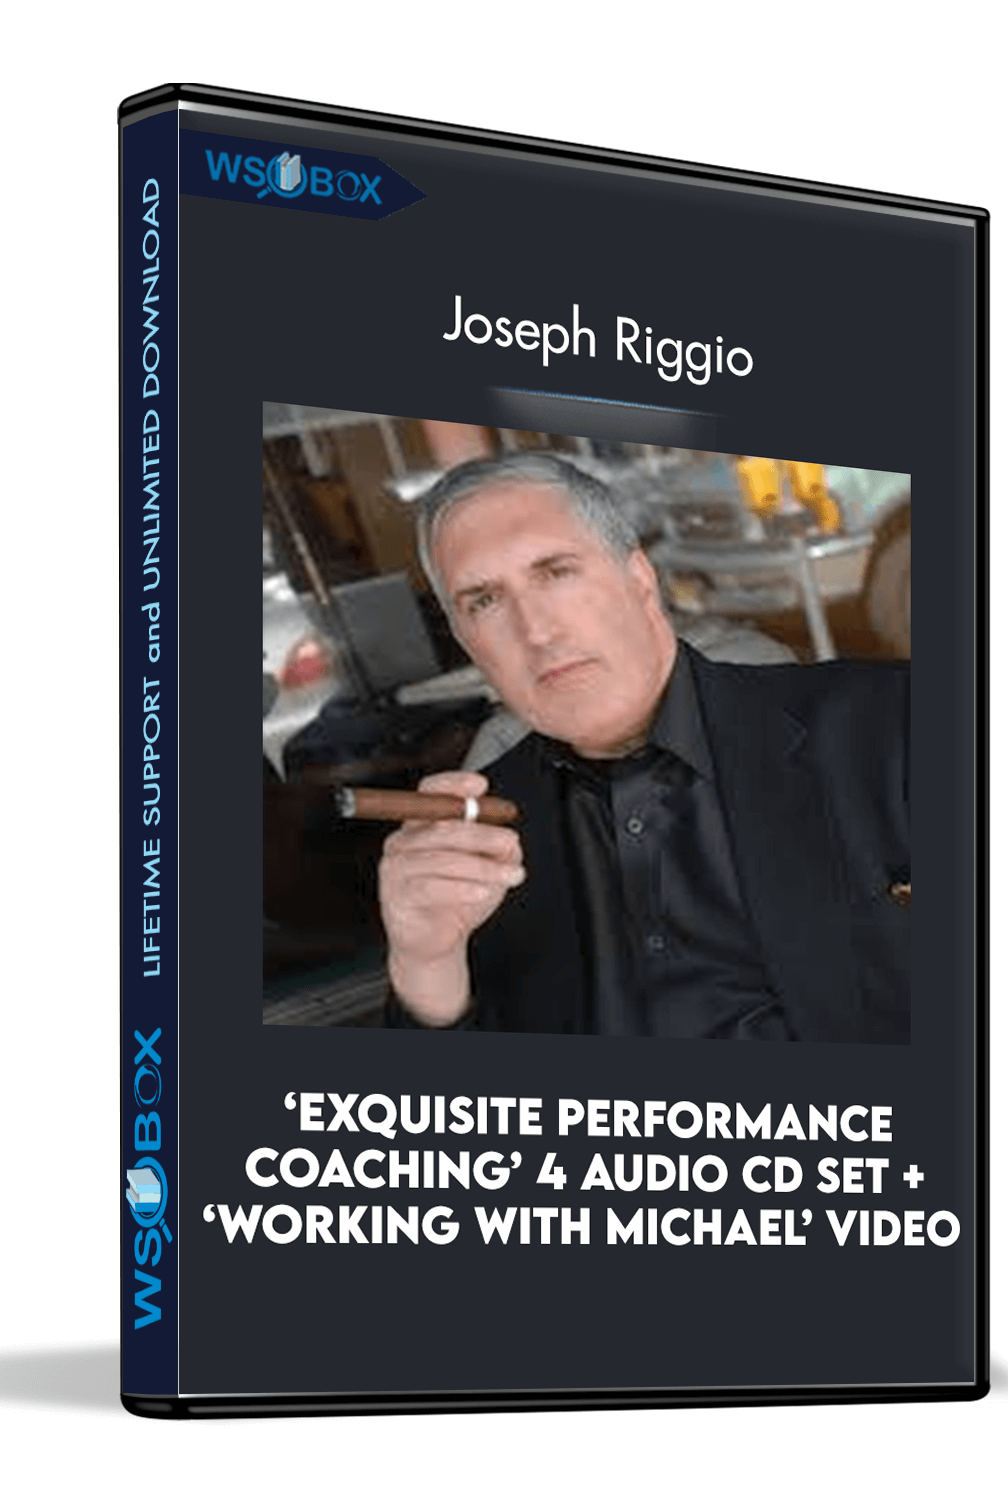 exquisite-performance-coaching-4-audio-cd-set-working-with-michael-video-joseph-riggio